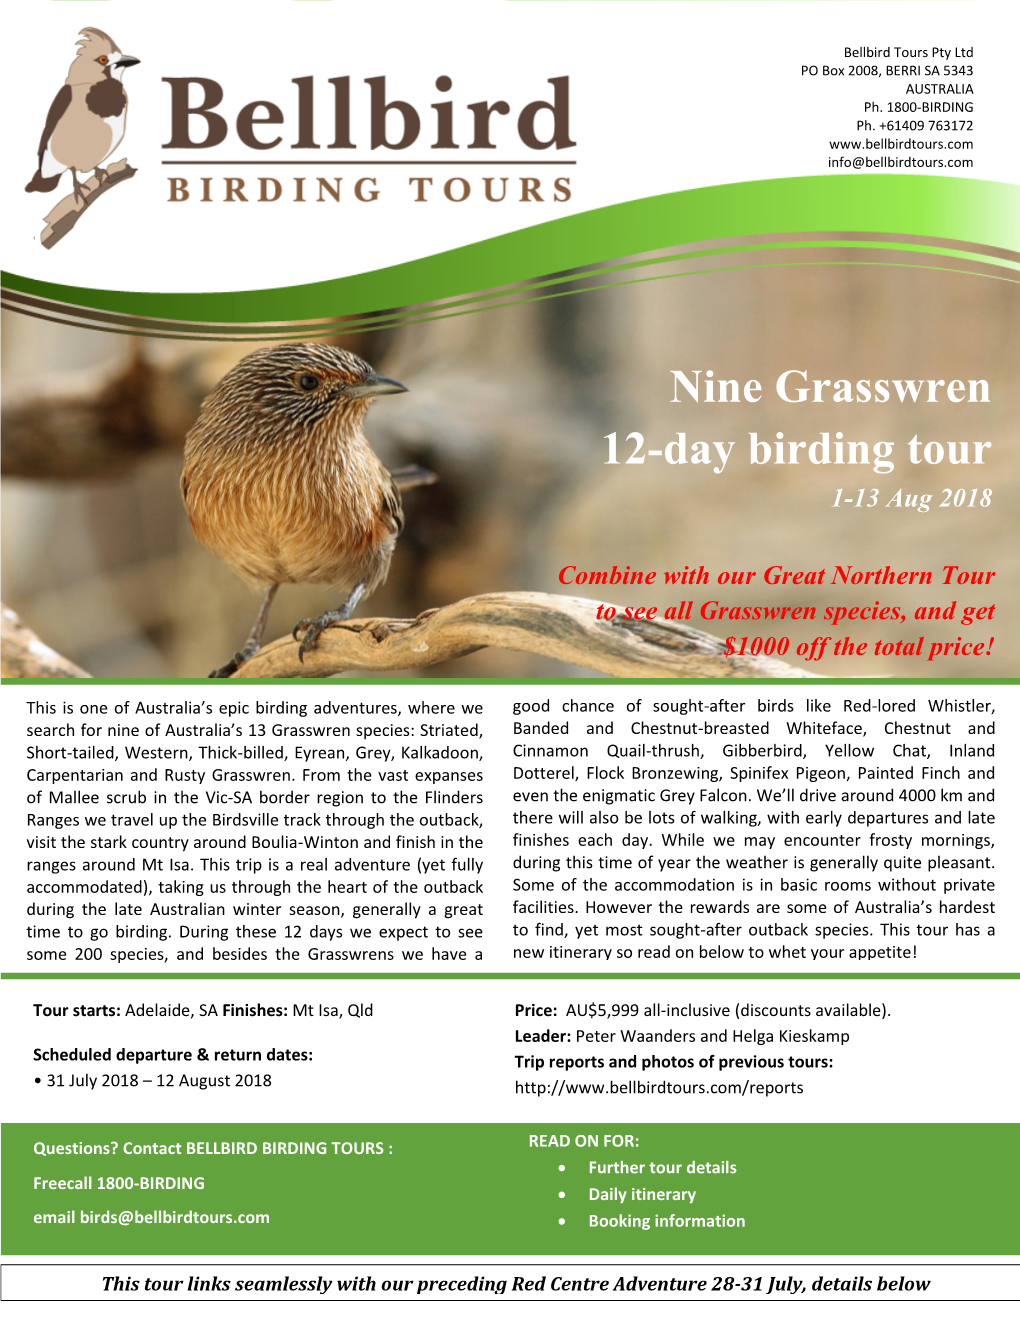 Nine Grasswren 12-Day Birding Tour 1-13 Aug 2018